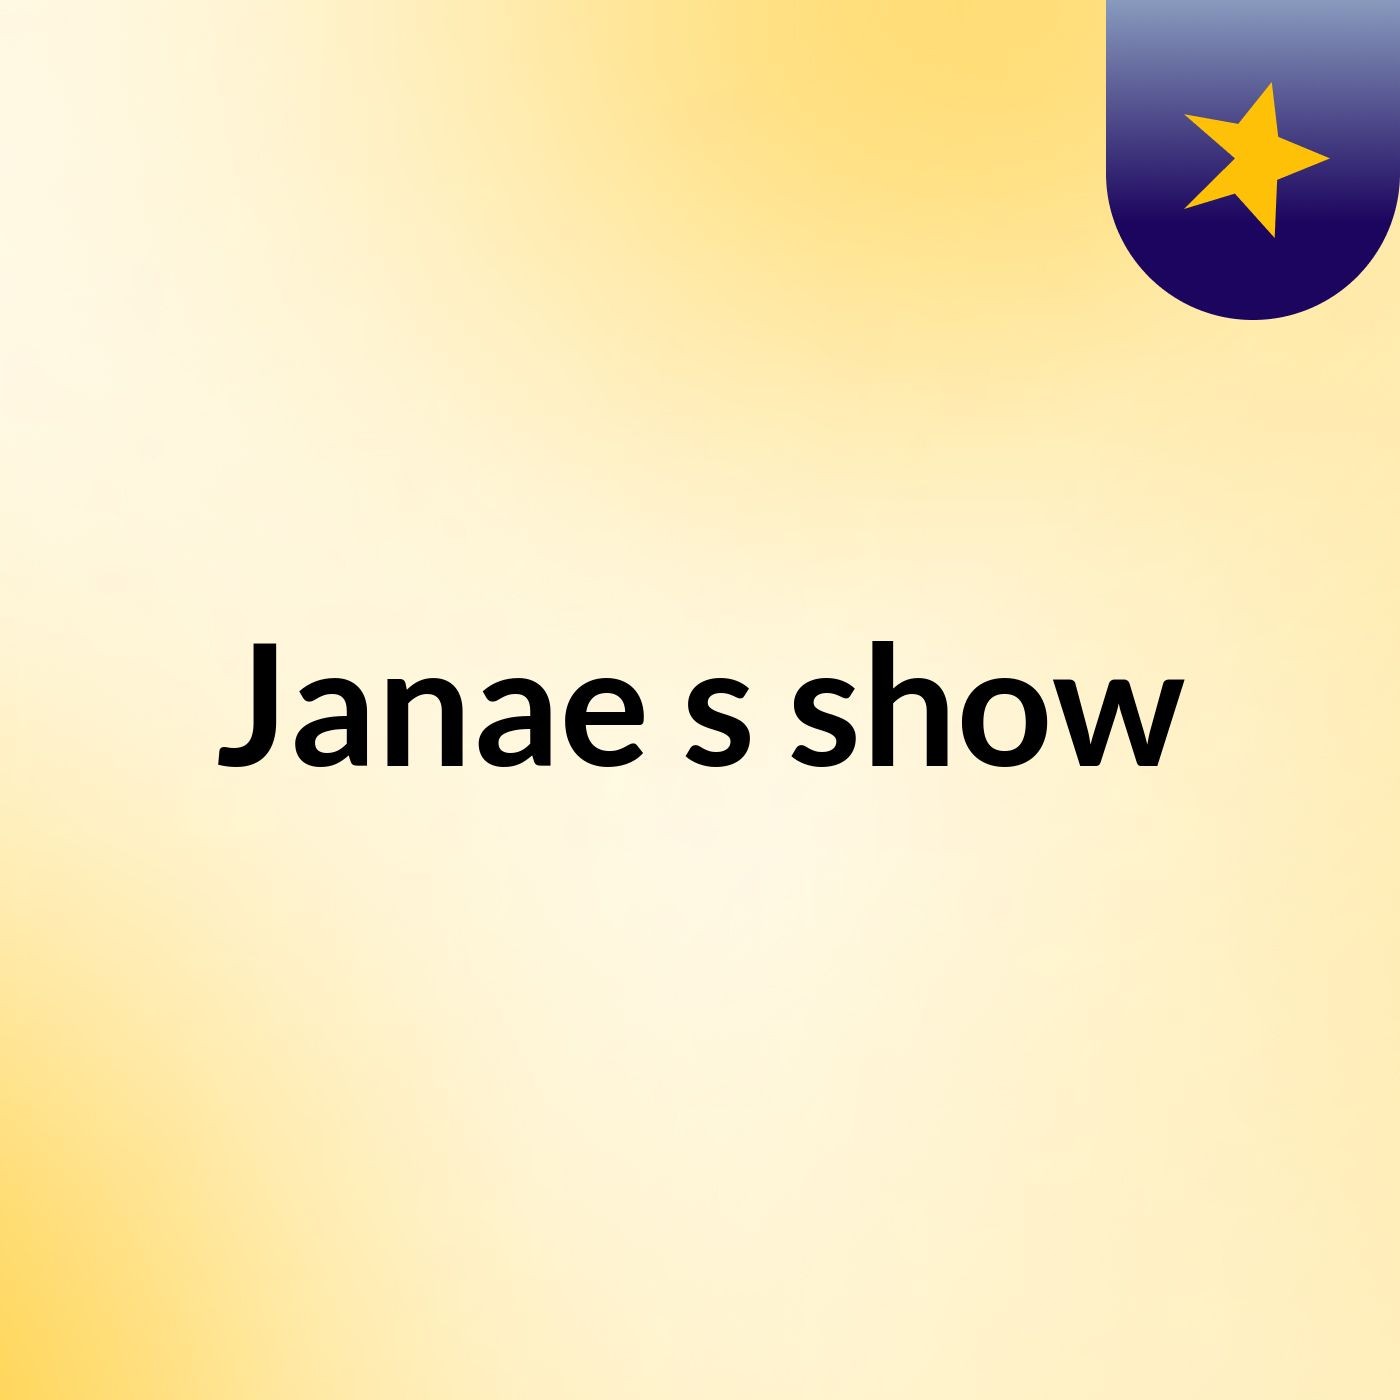 Janae's show